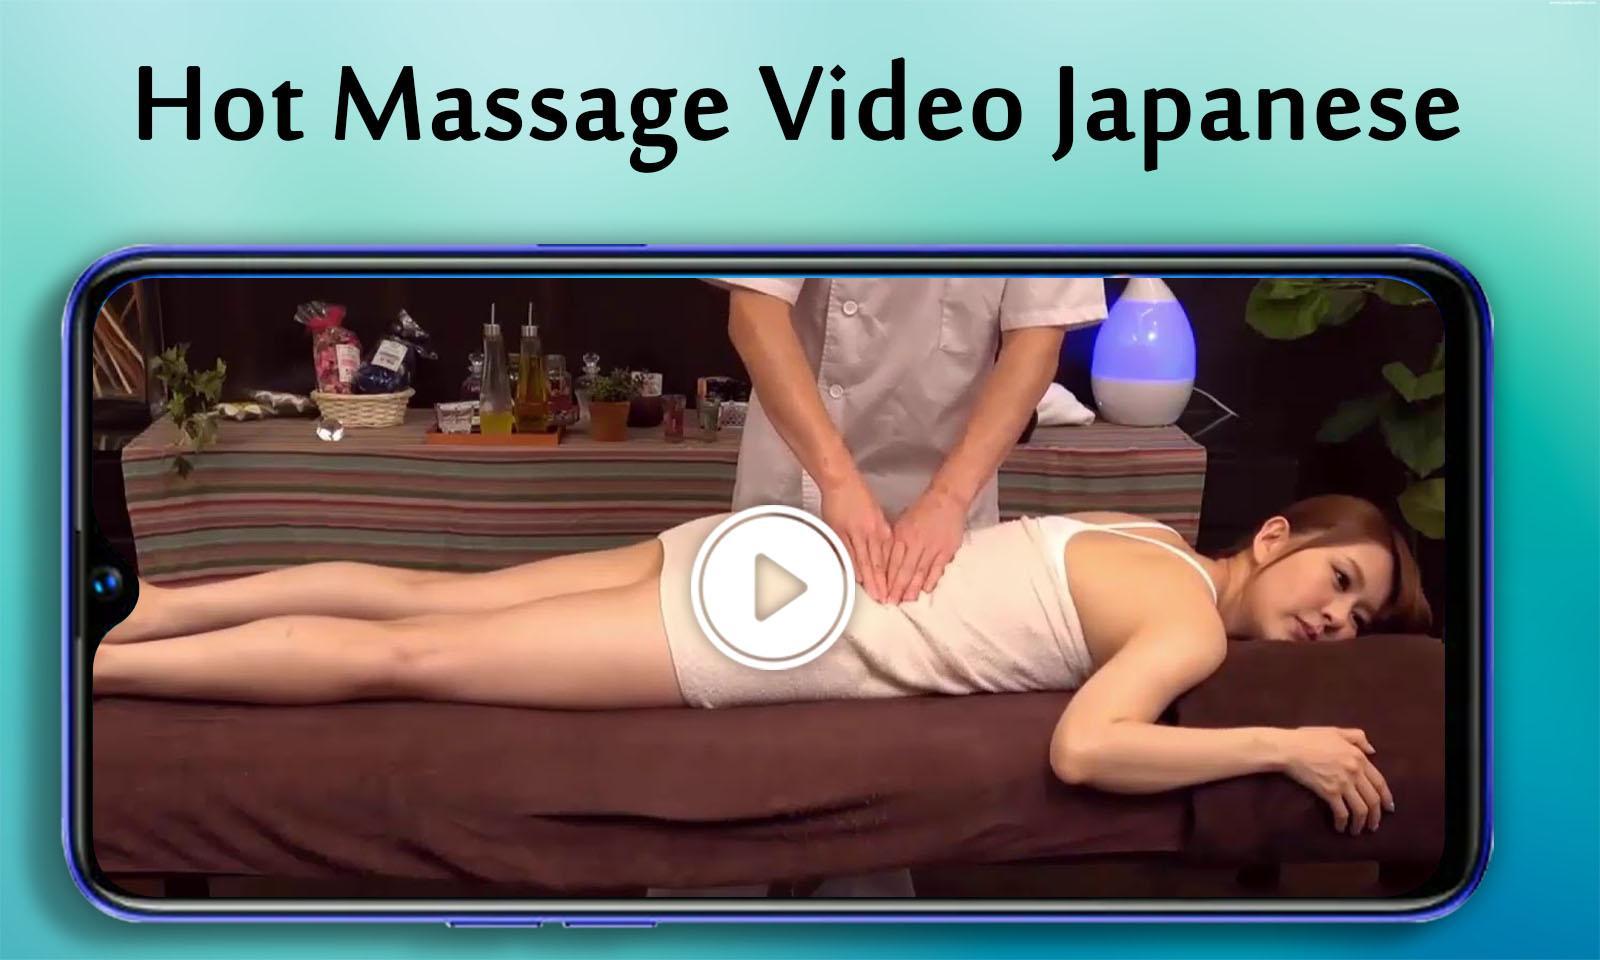 Japanese Full Massage Video swx chat